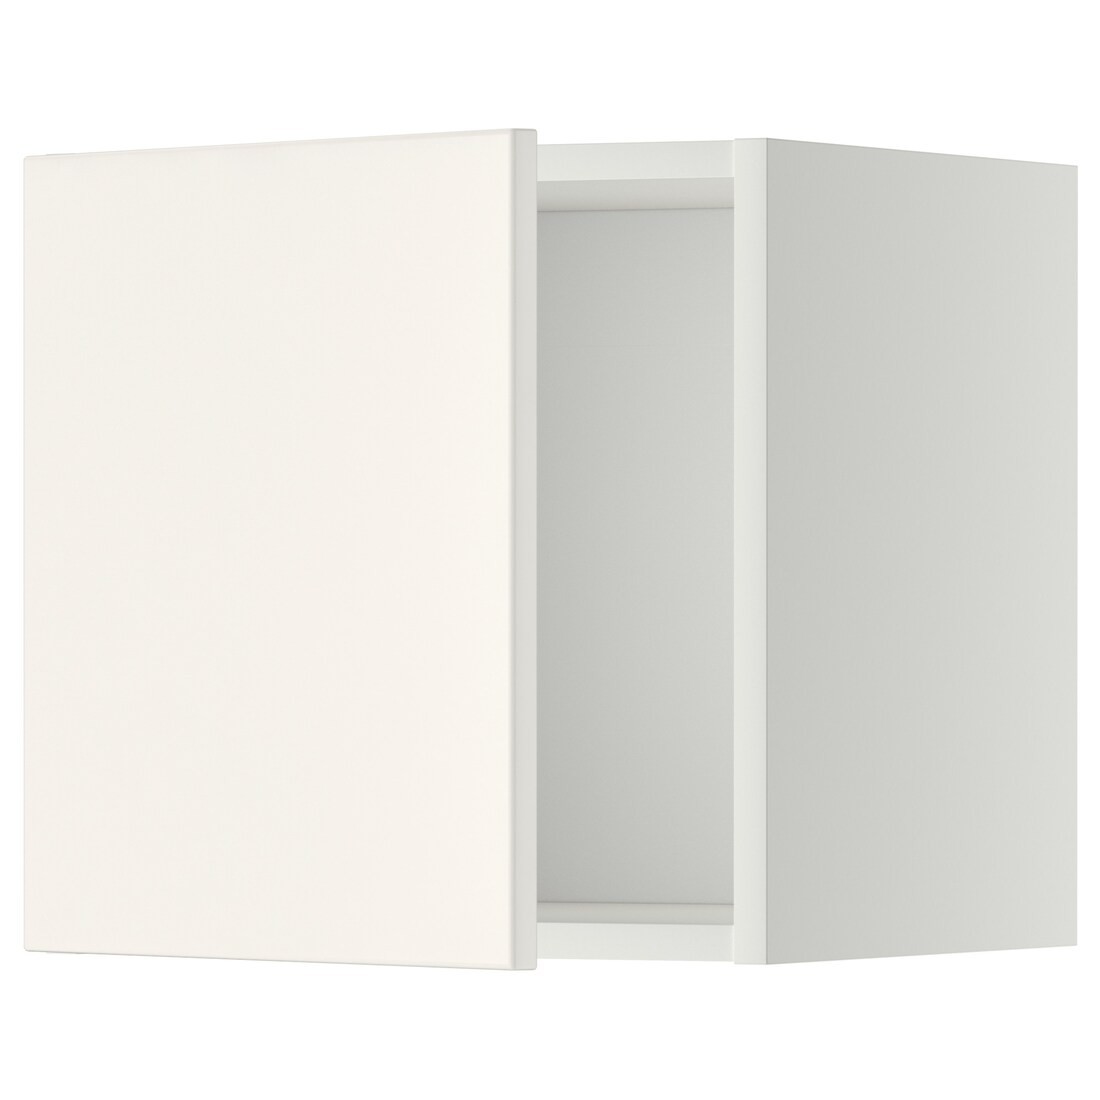 IKEA METOD МЕТОД Настенный шкаф, белый / Veddinge белый, 40x40 см 39461670 | 394.616.70